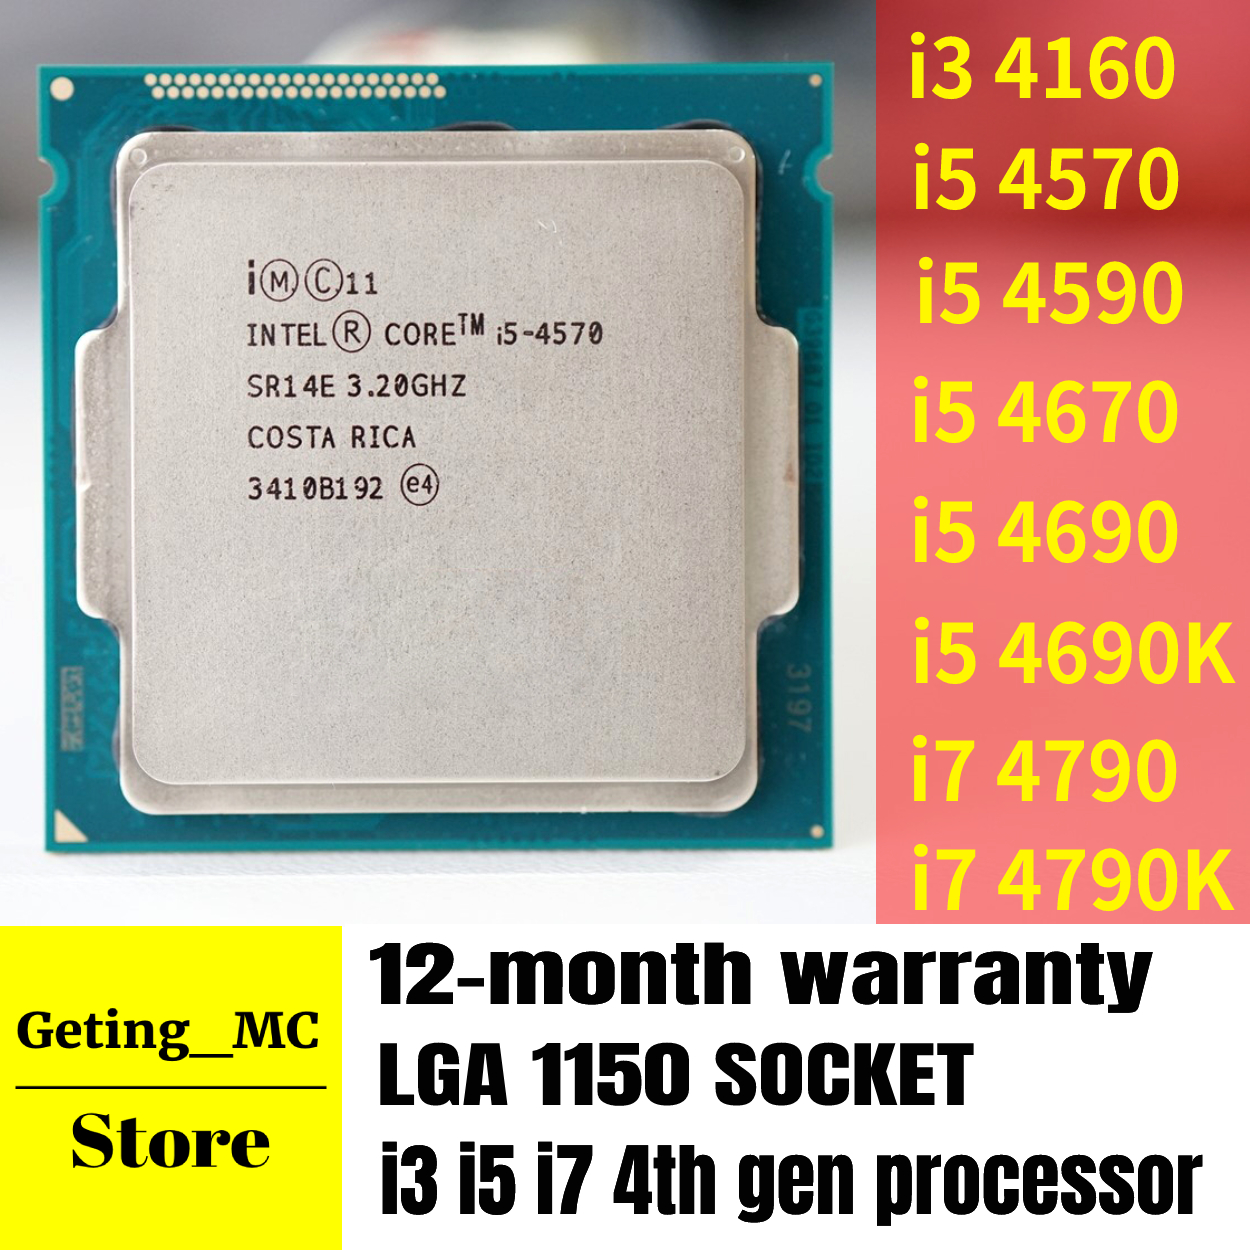 Putte Energize Rullesten Intel Core i3 4160 i5 4570 4590 4670 4690 4690K i7 4790 4790K Processor For  desktop PC 4th gen CPU LGA 1150 Socket | Lazada PH